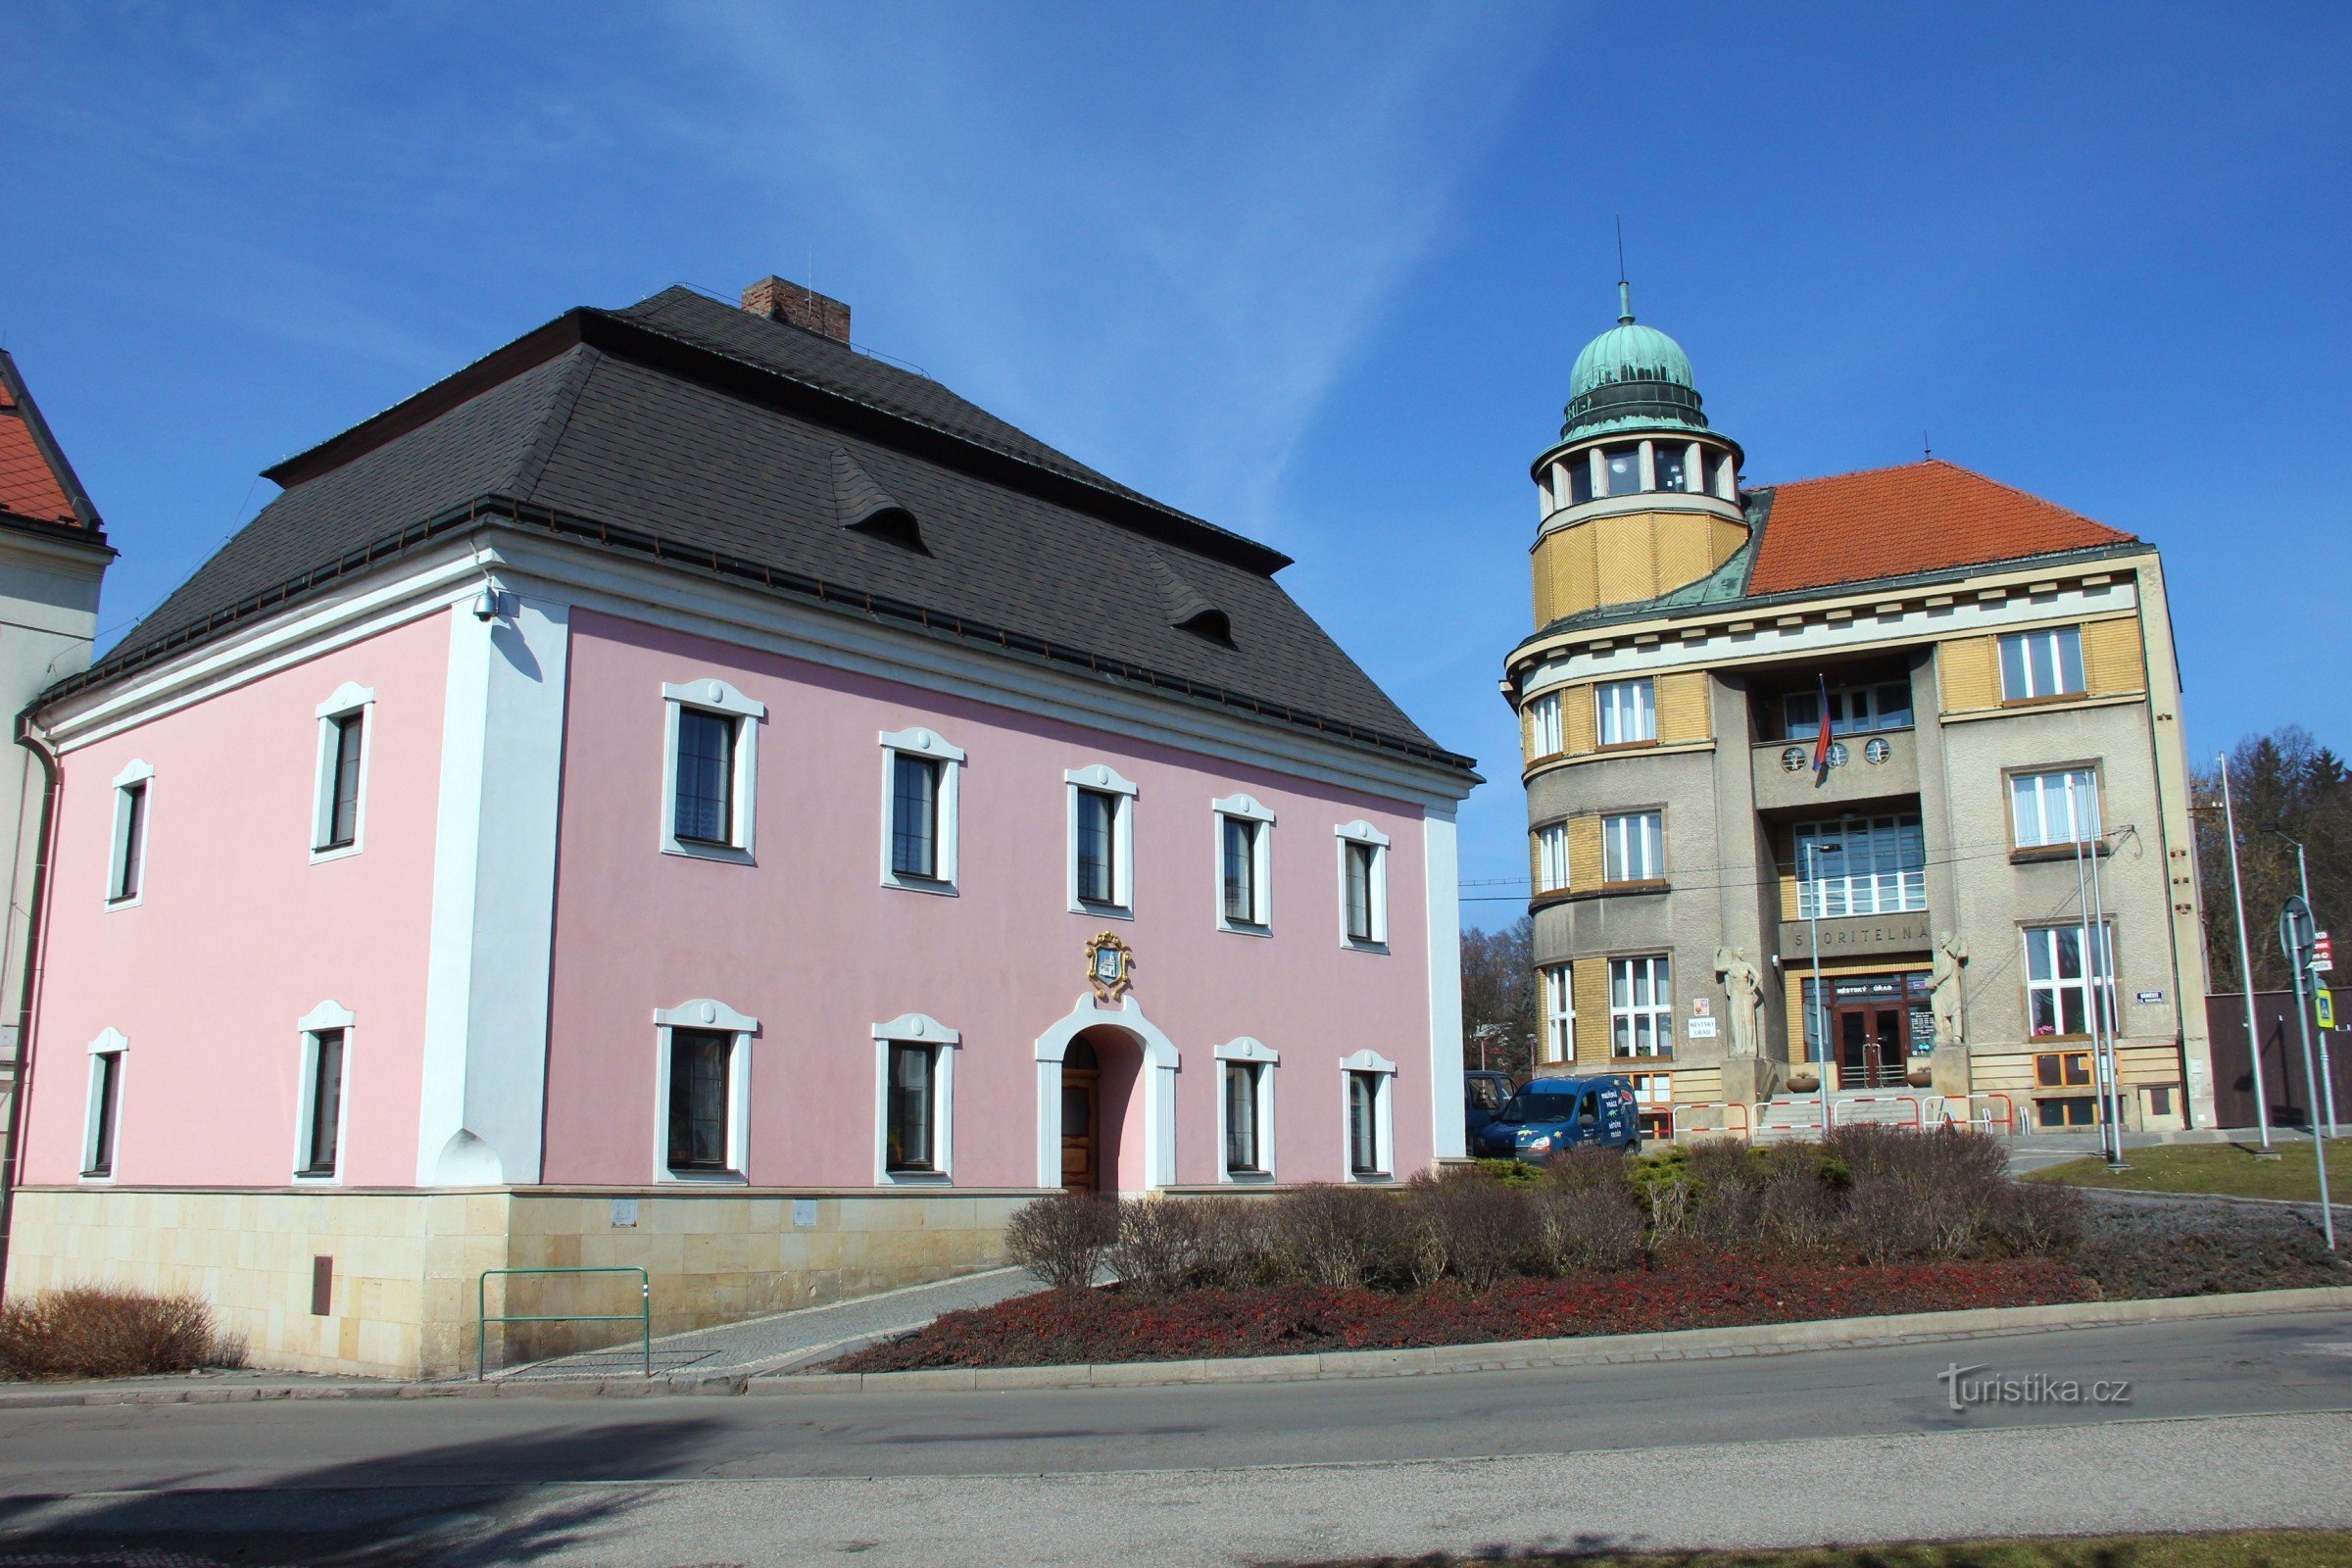 Het oude stadhuis in Červený Kostelec